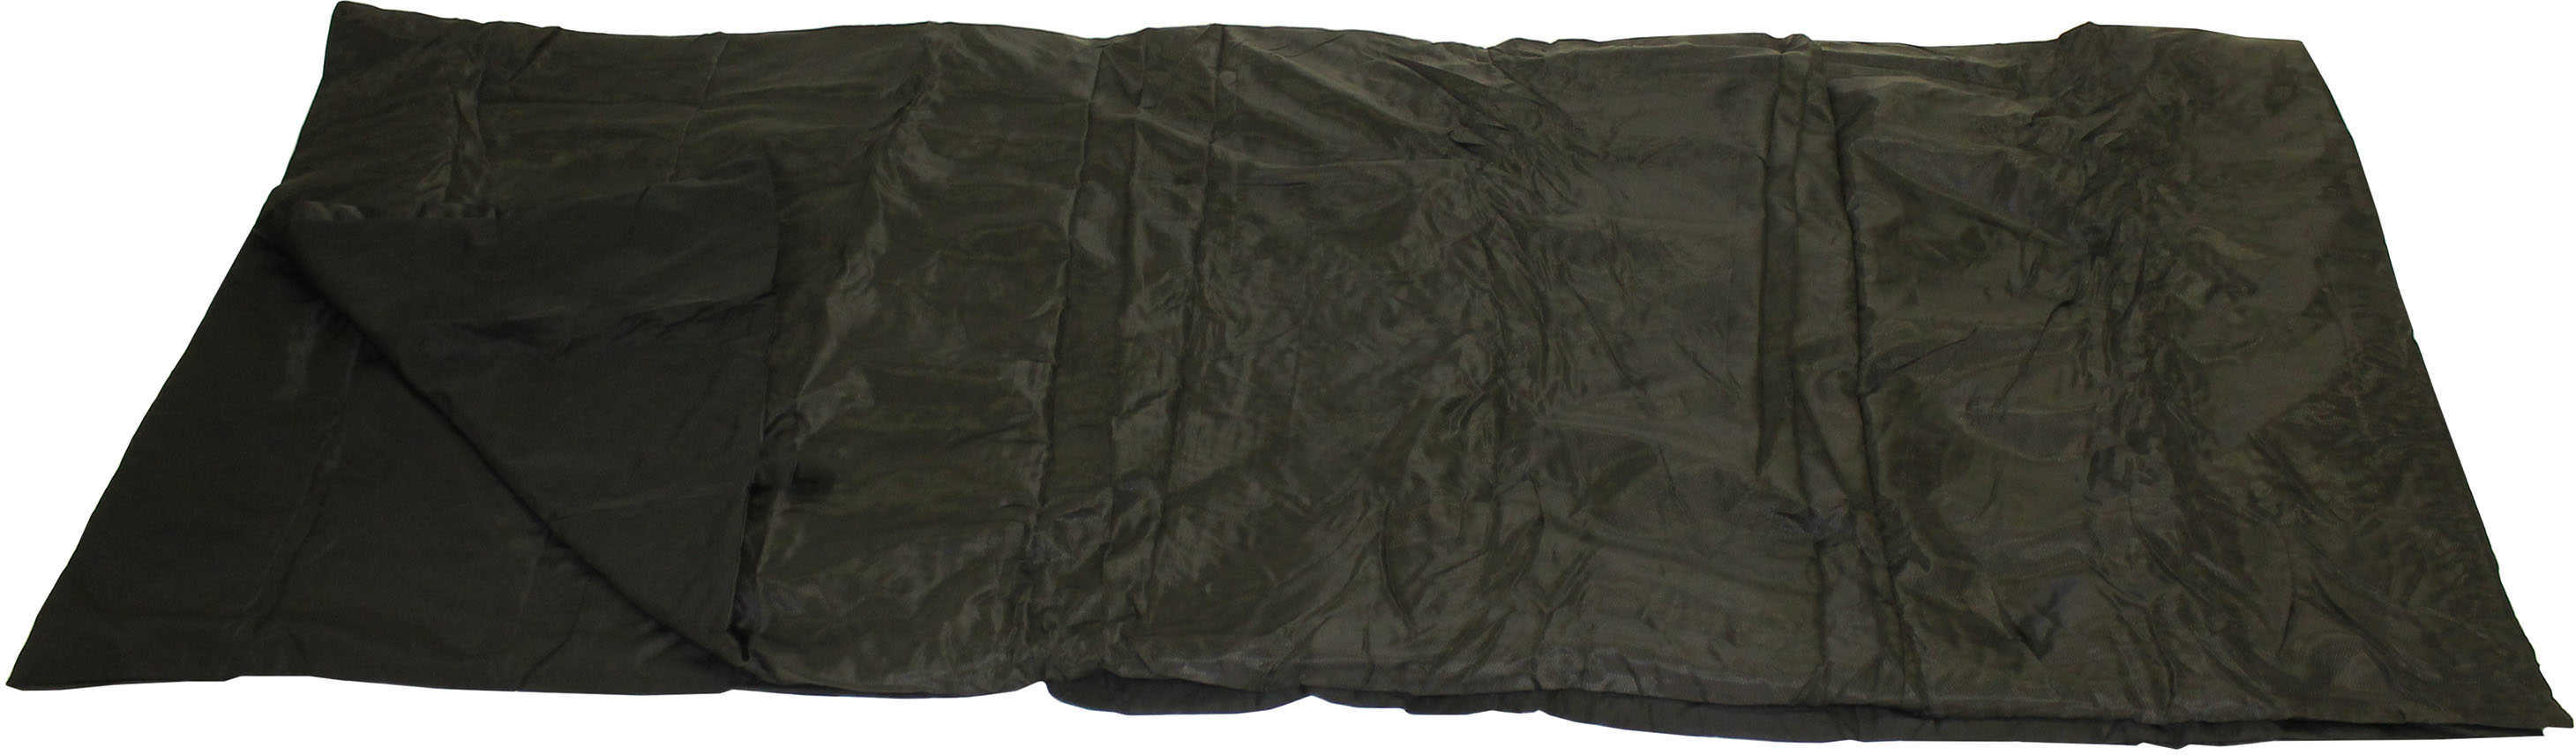 Jungle Blanket, Black Md: 92248 Proforce Equipmen